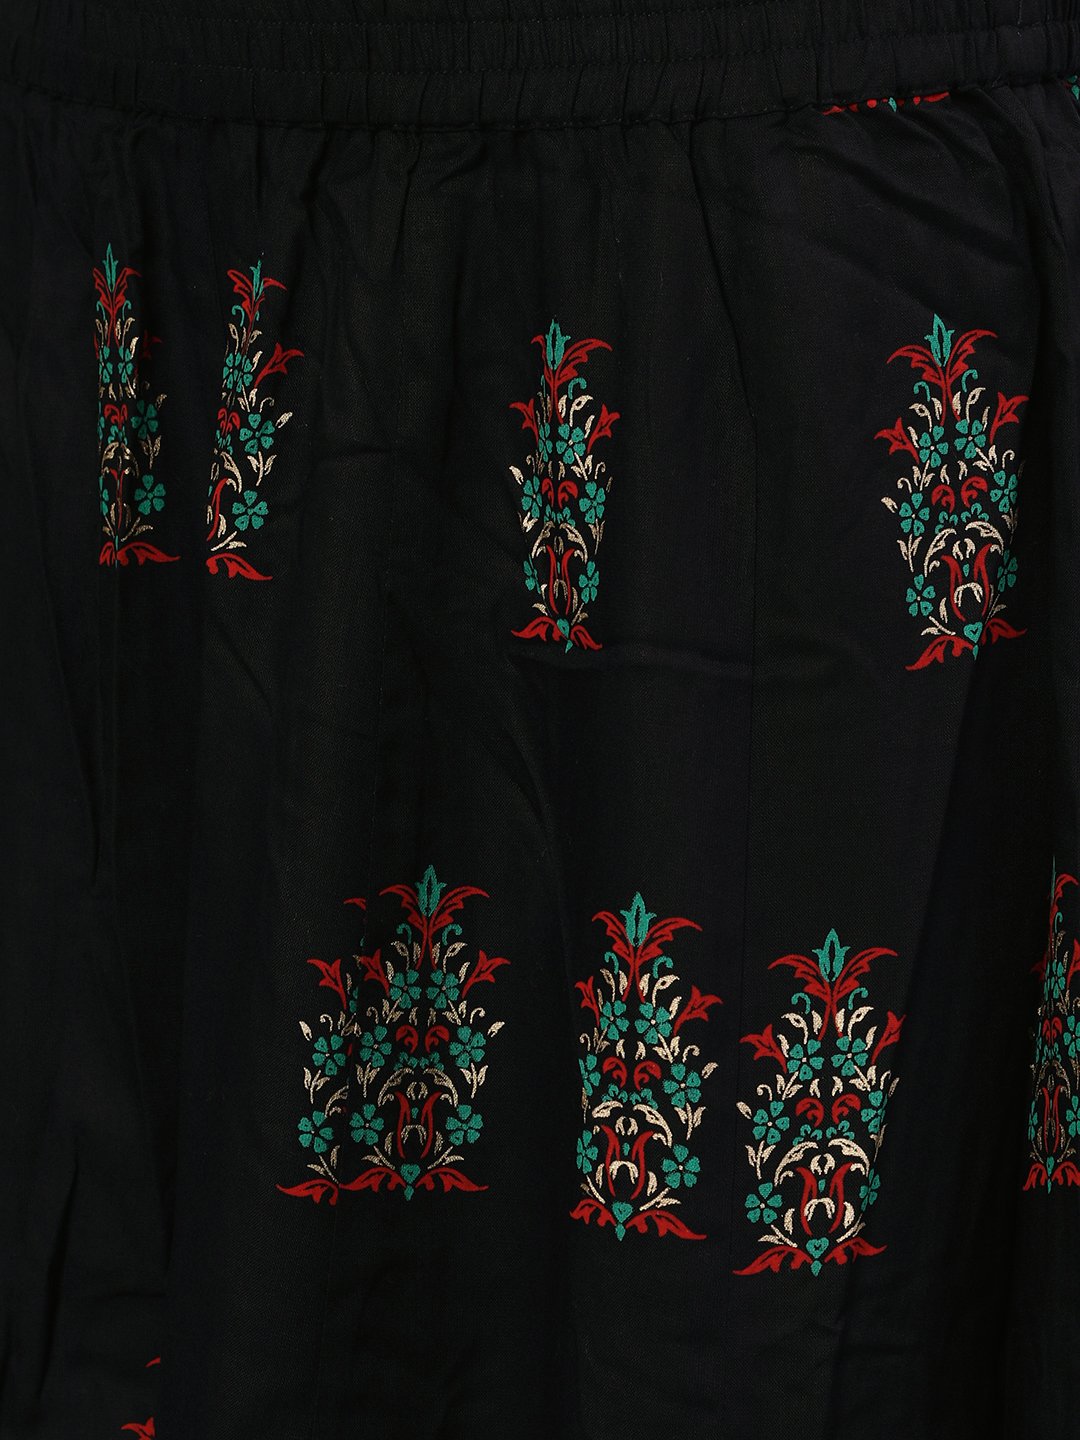 Ishin Women's Rayon Black Embellished Straight Kurta Sharara Set